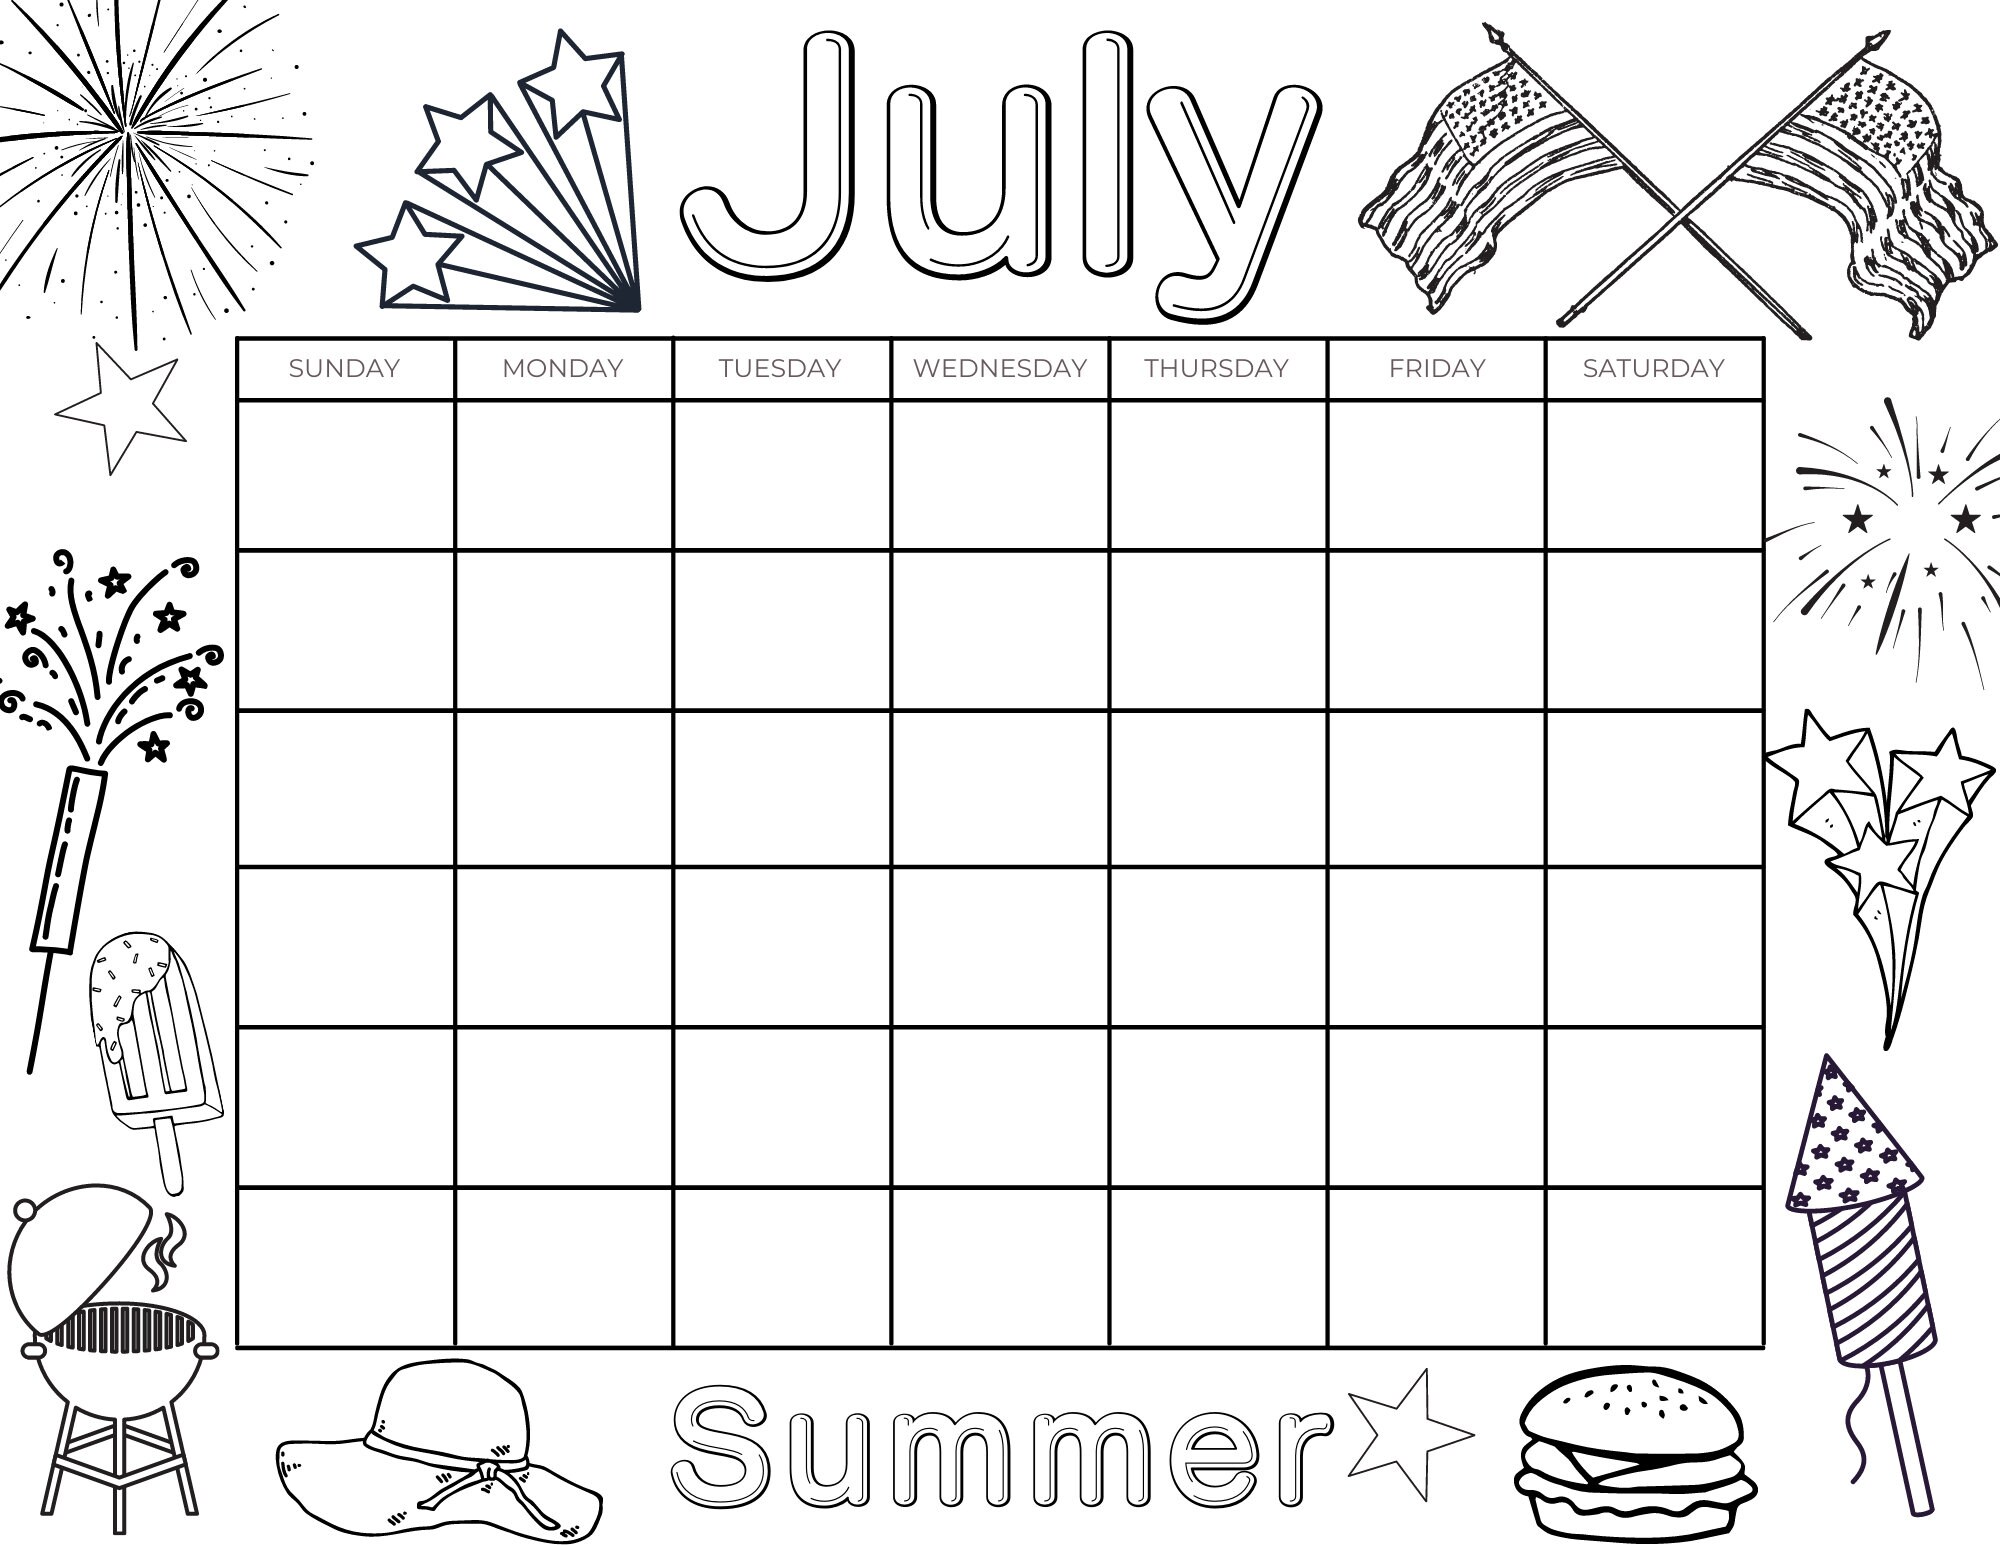 Printable coloring calendar for kids kids calendar printable kids calendar instant download